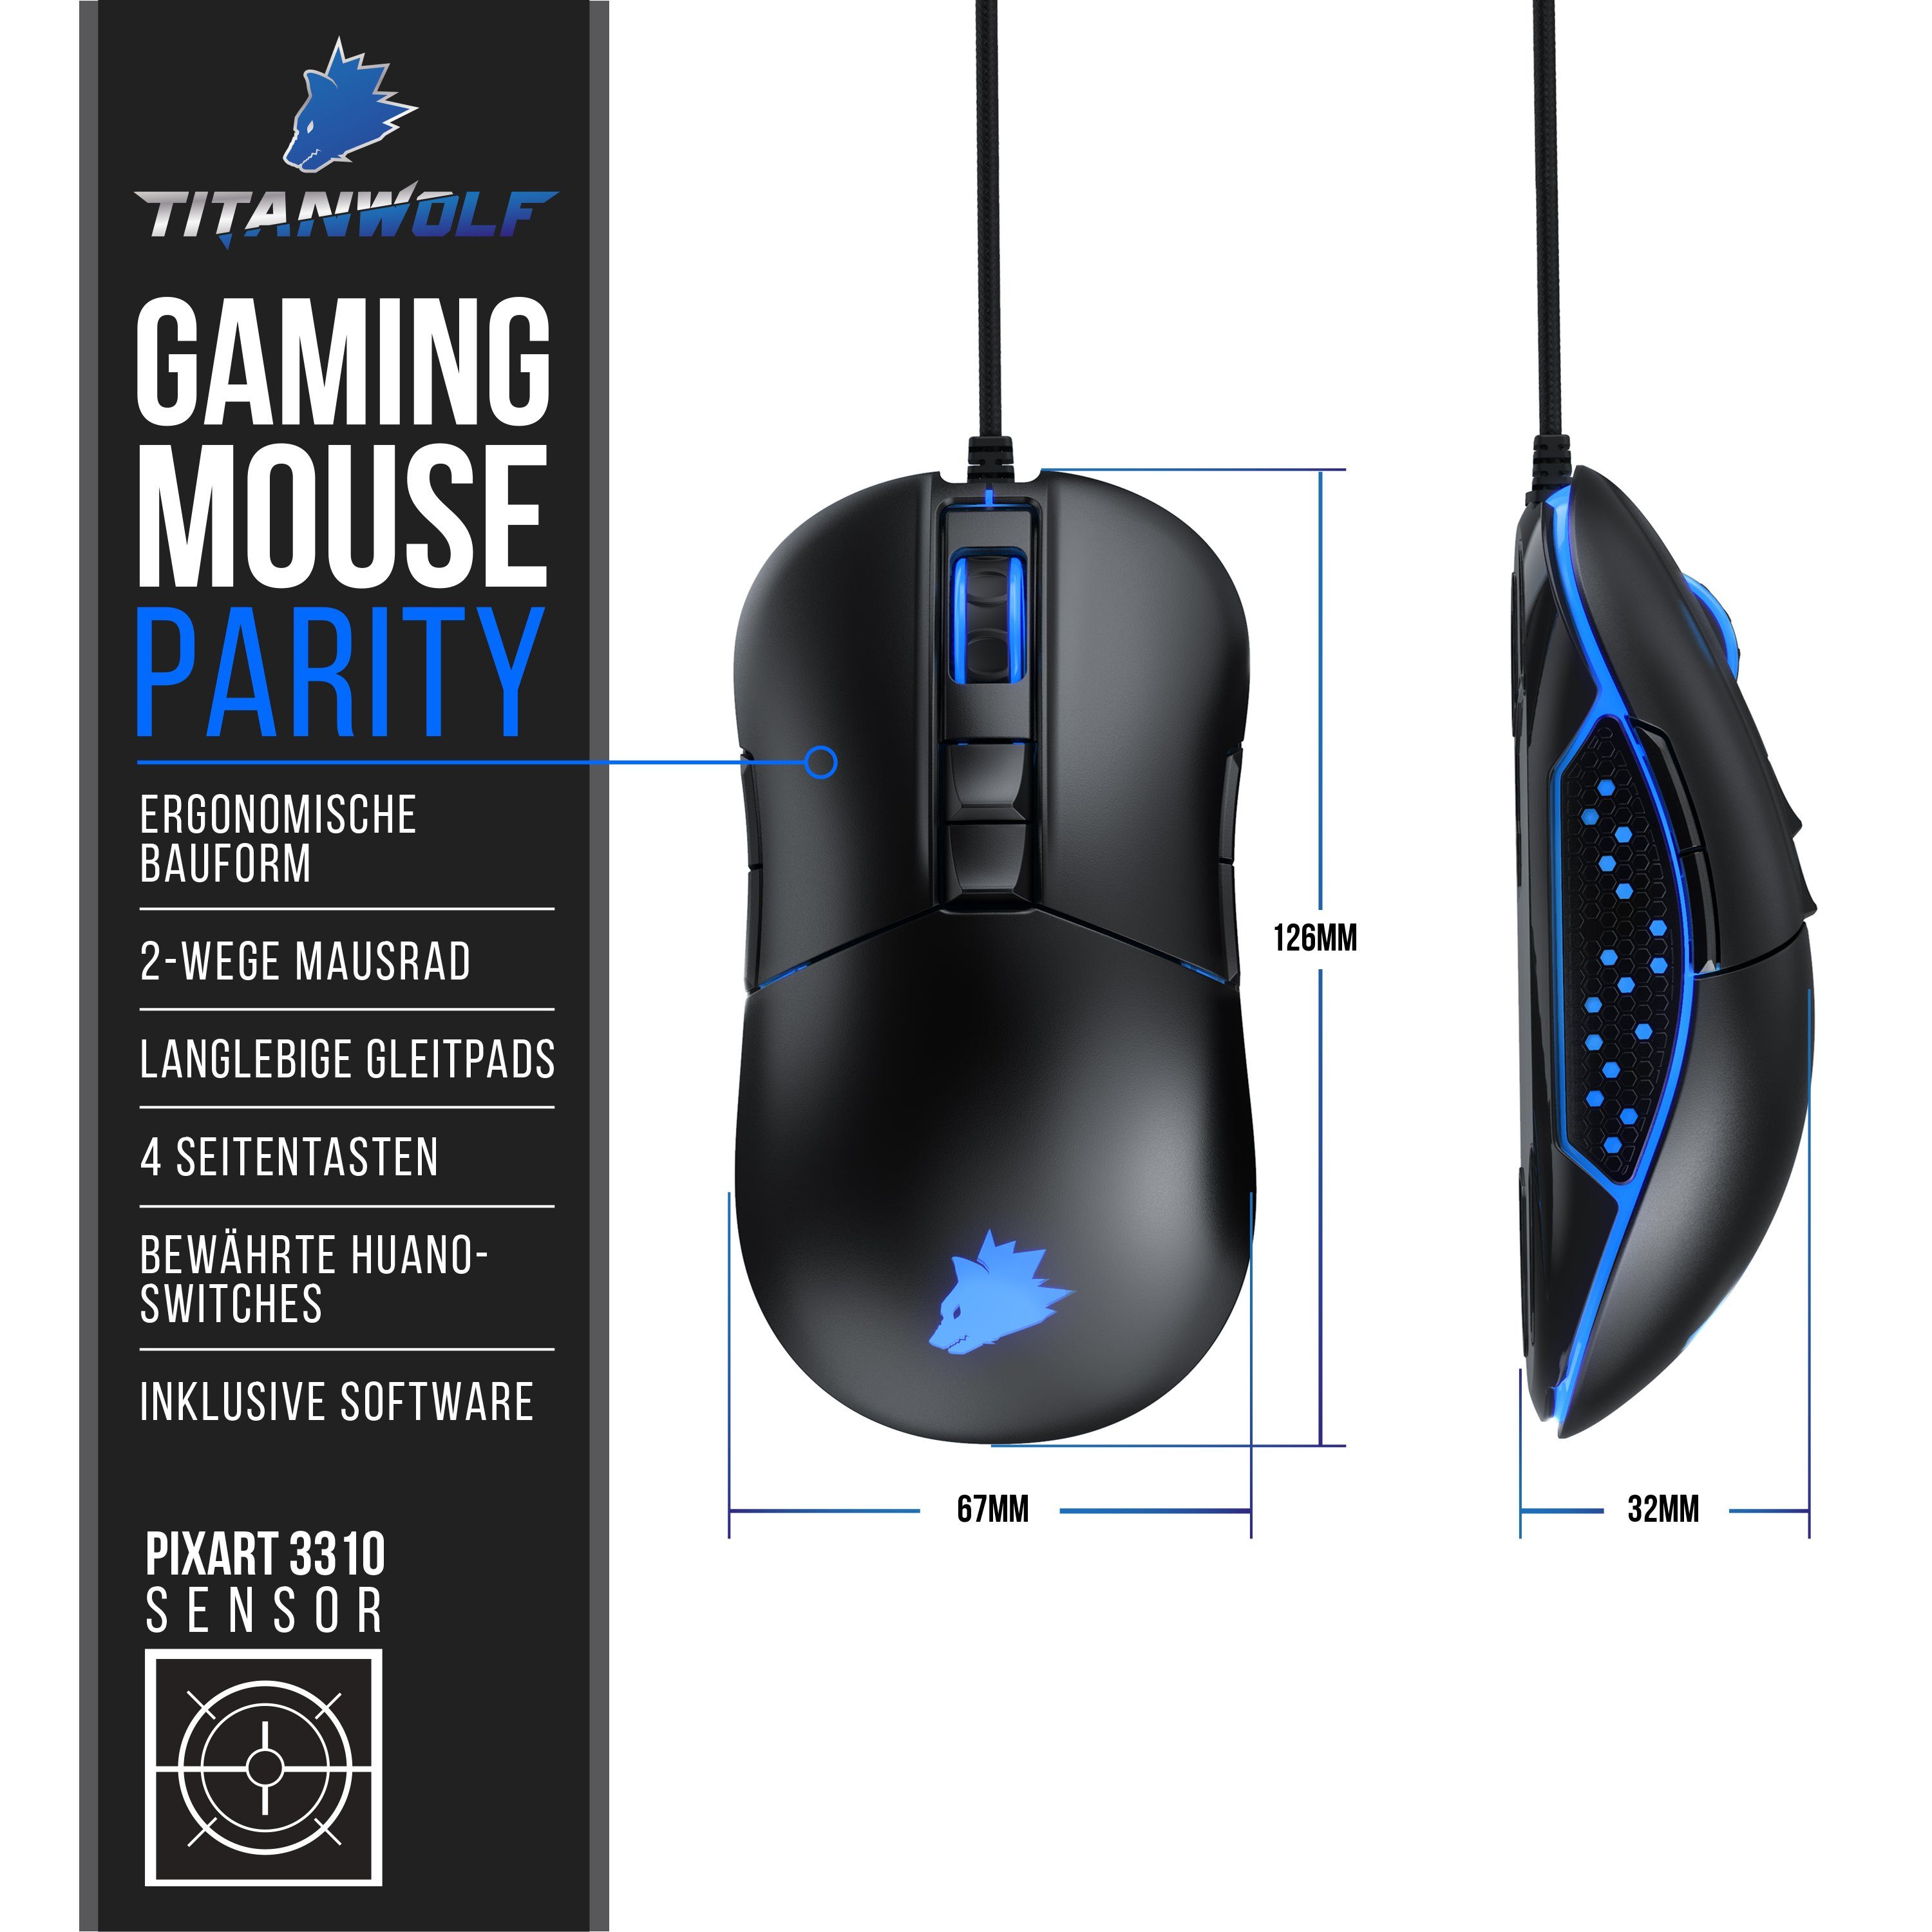 Titanwolf Gaming-Maus (Mouse für Rechts Sensor, RGB) 5000 3310 & dpi, Linkshänder, Pixart